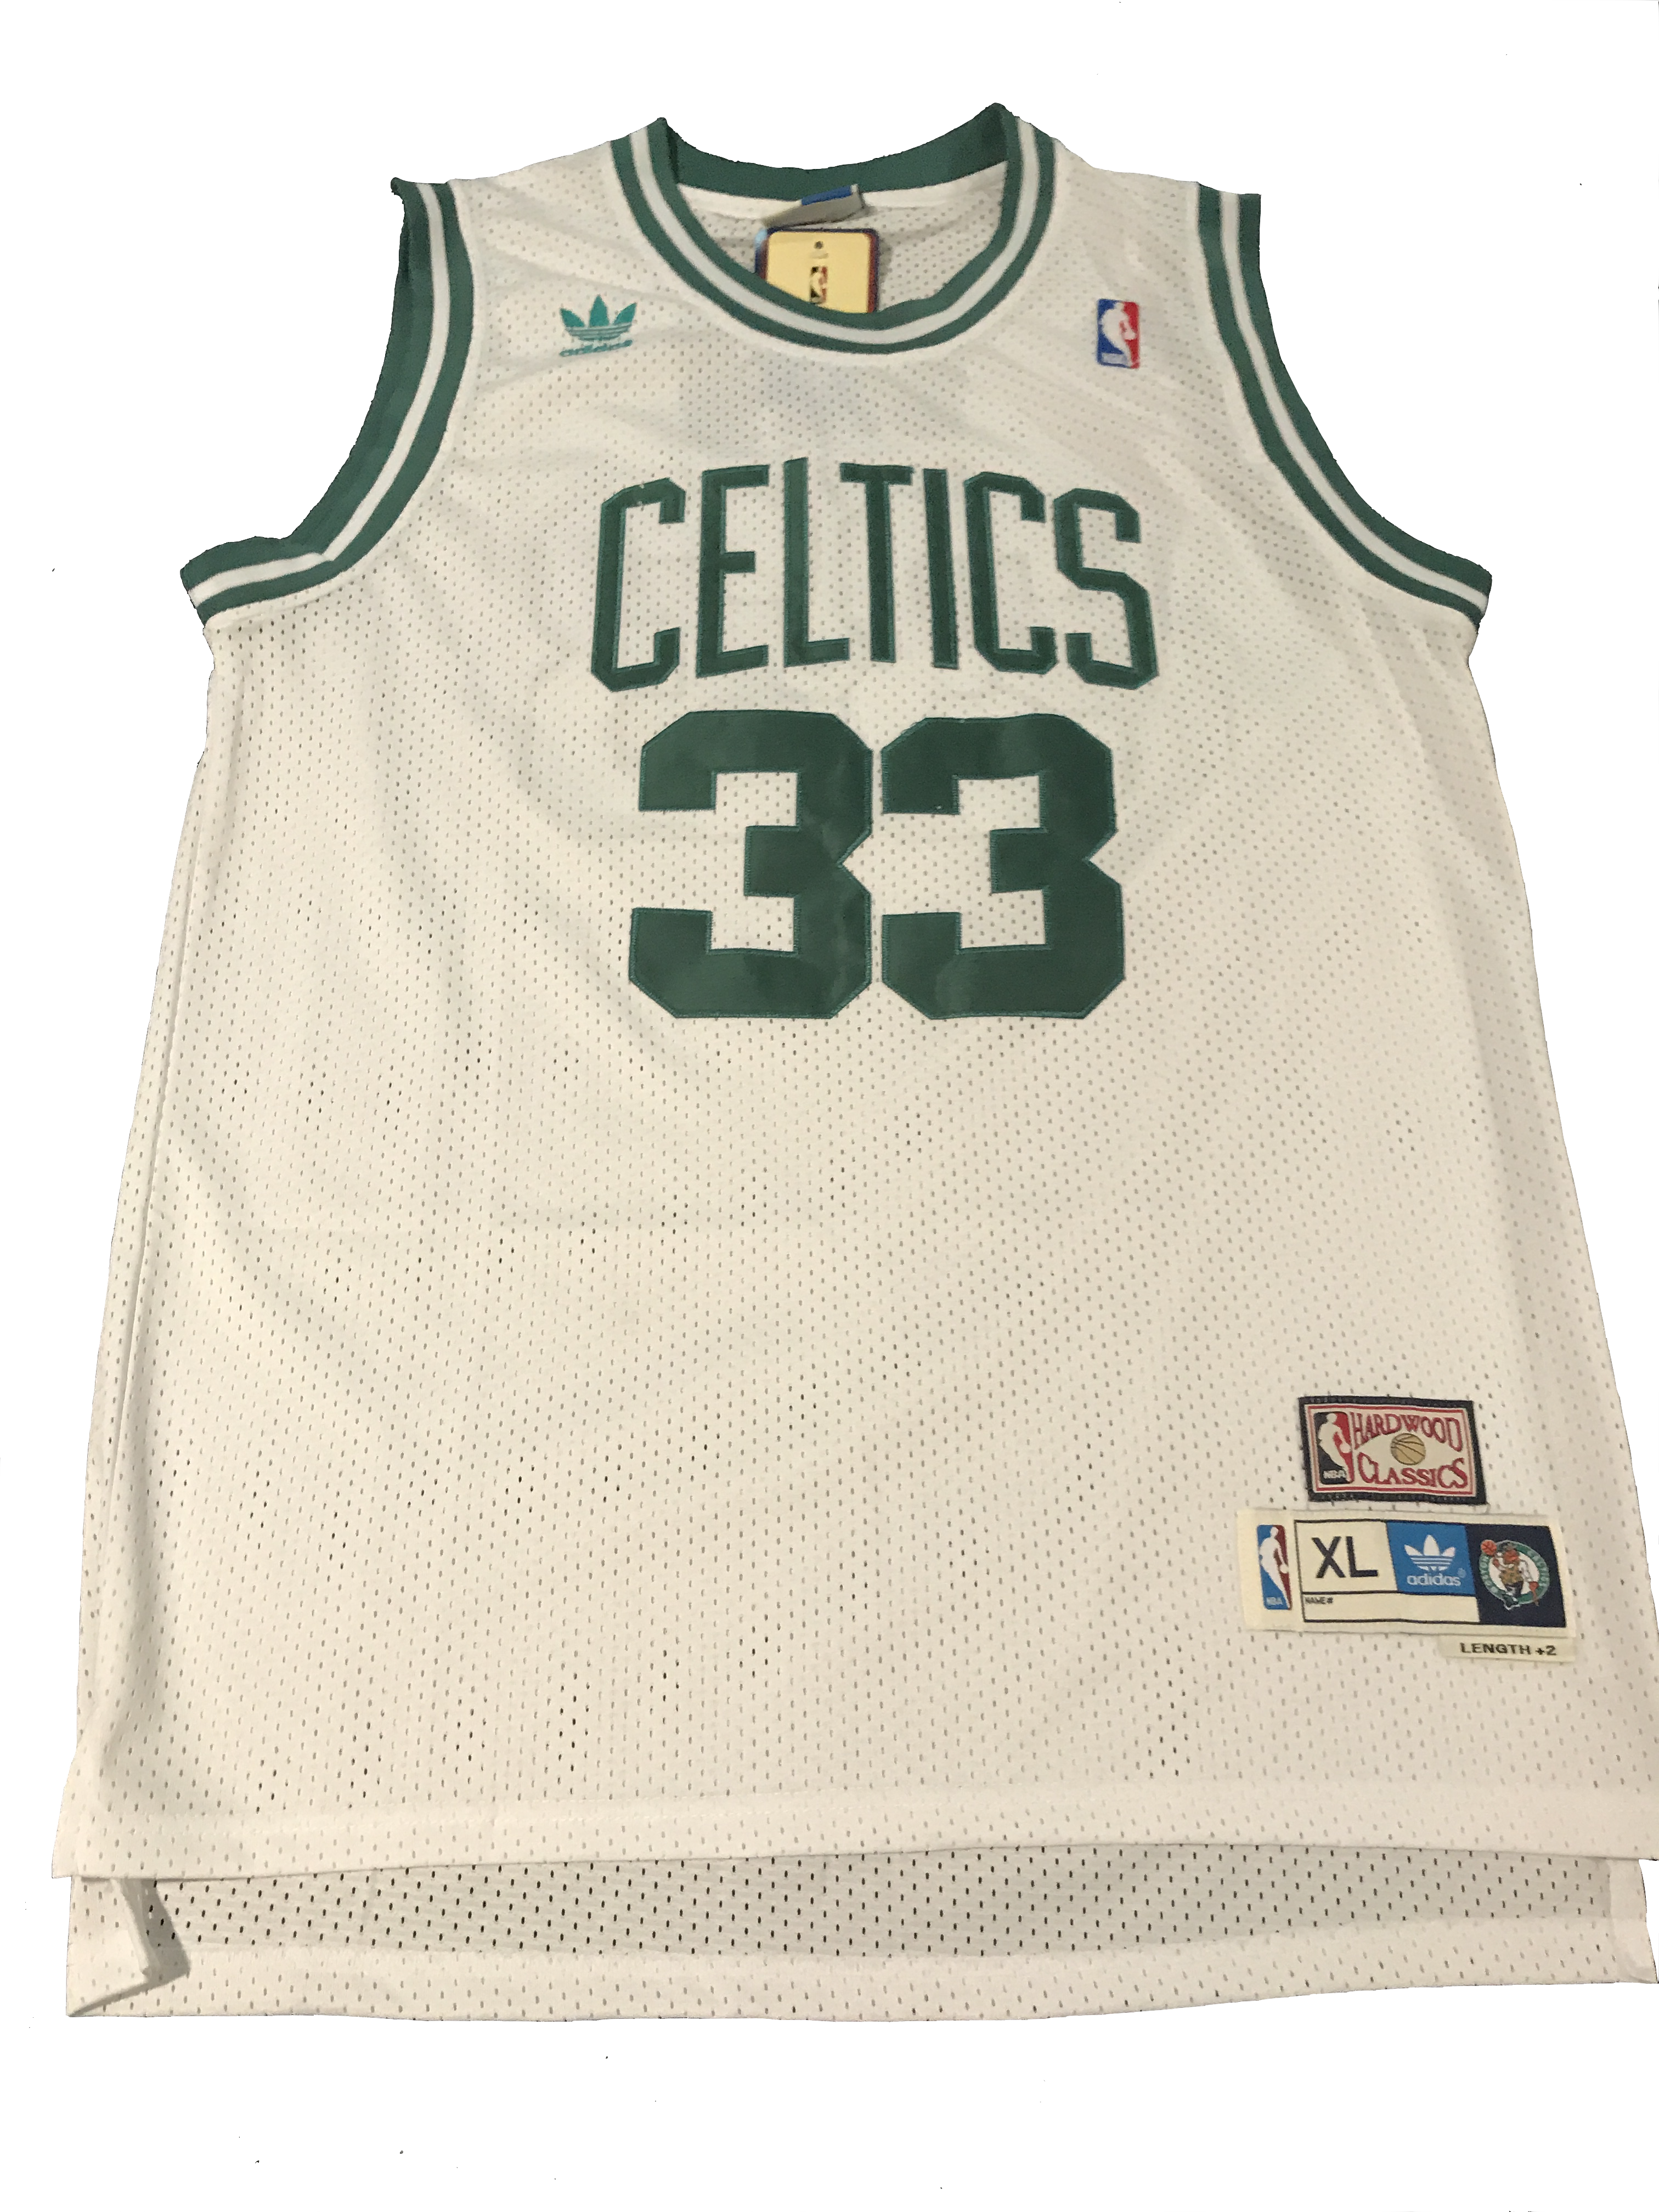 Celtics33 Basketball Jersey